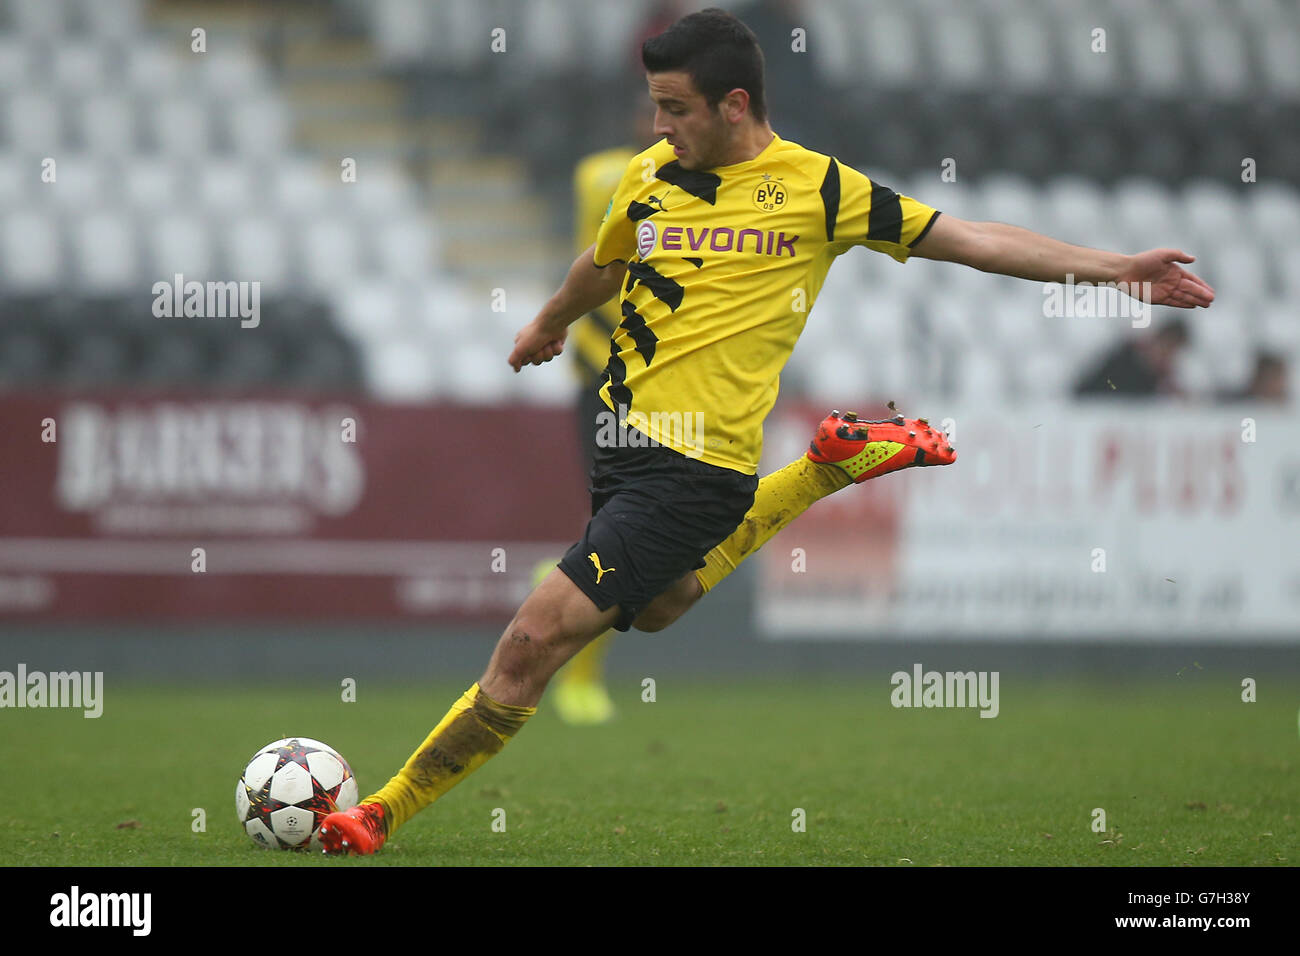 Calcio - UEFA Youth League - Gruppo D - Arsenal v Borussia Dortmund - Borehamwood. Mehmet Alp jurt, Borussia Dortmund. Foto Stock